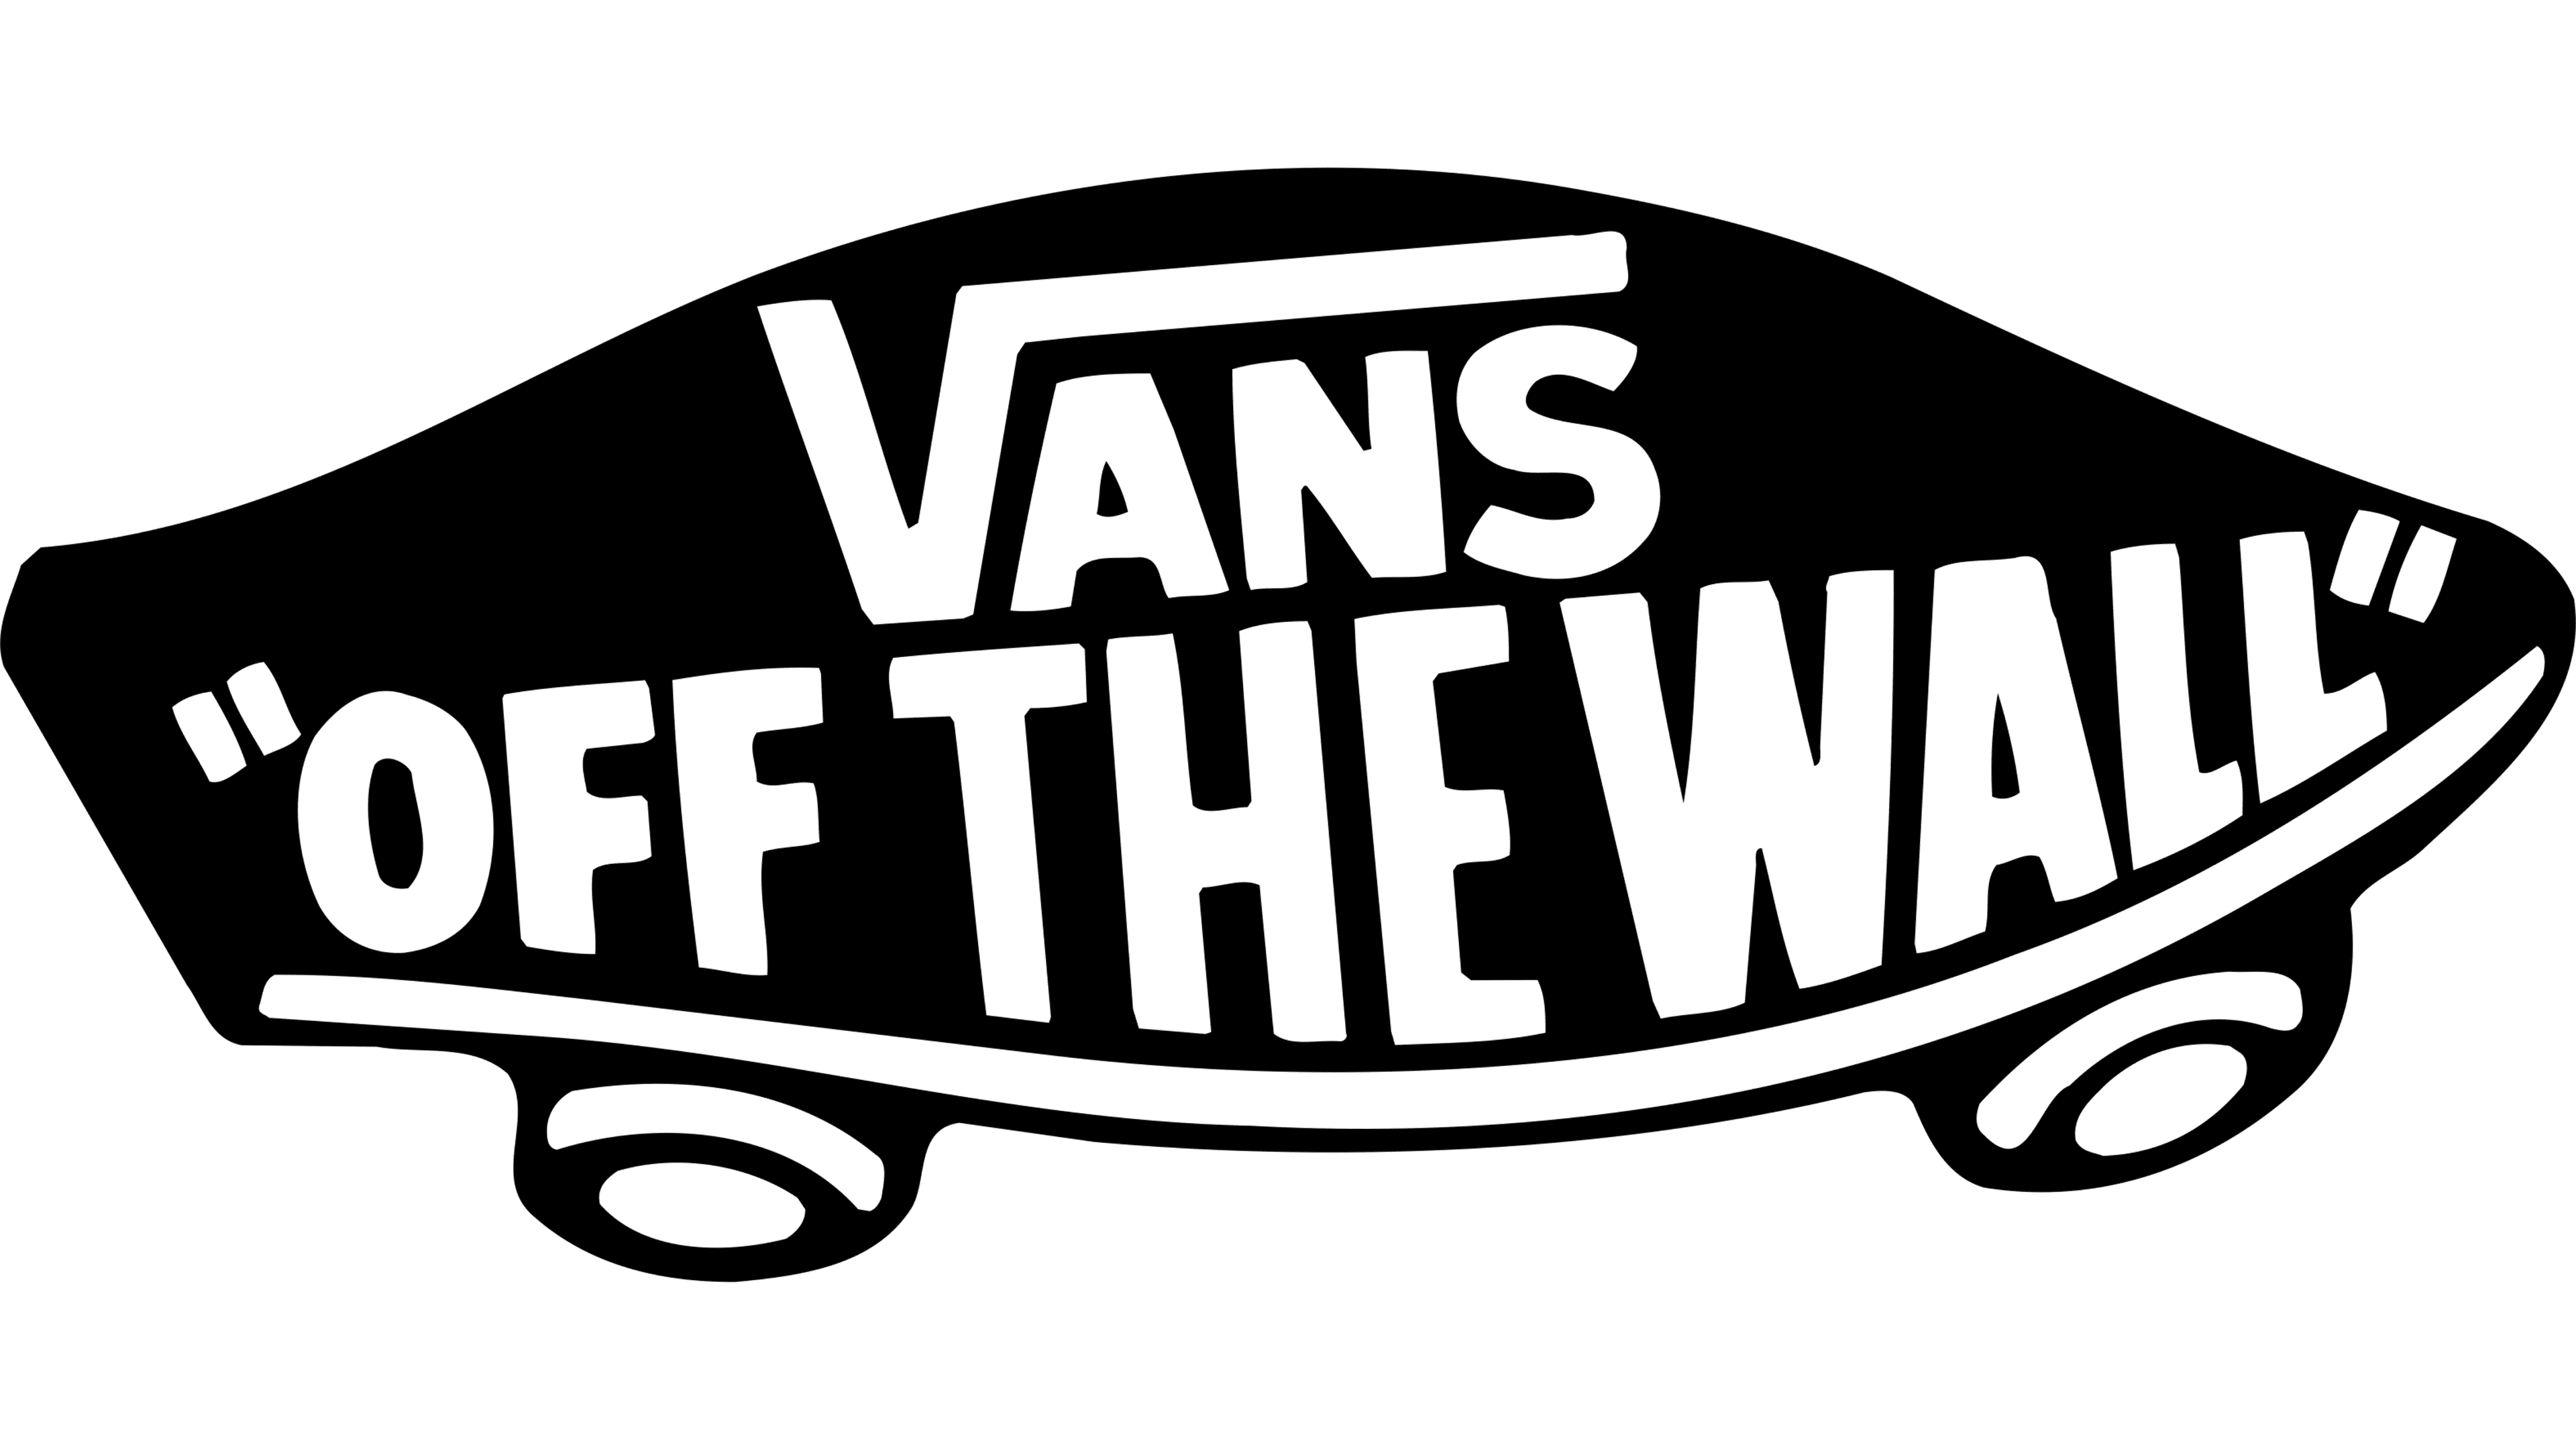 vans logo cheap buy online